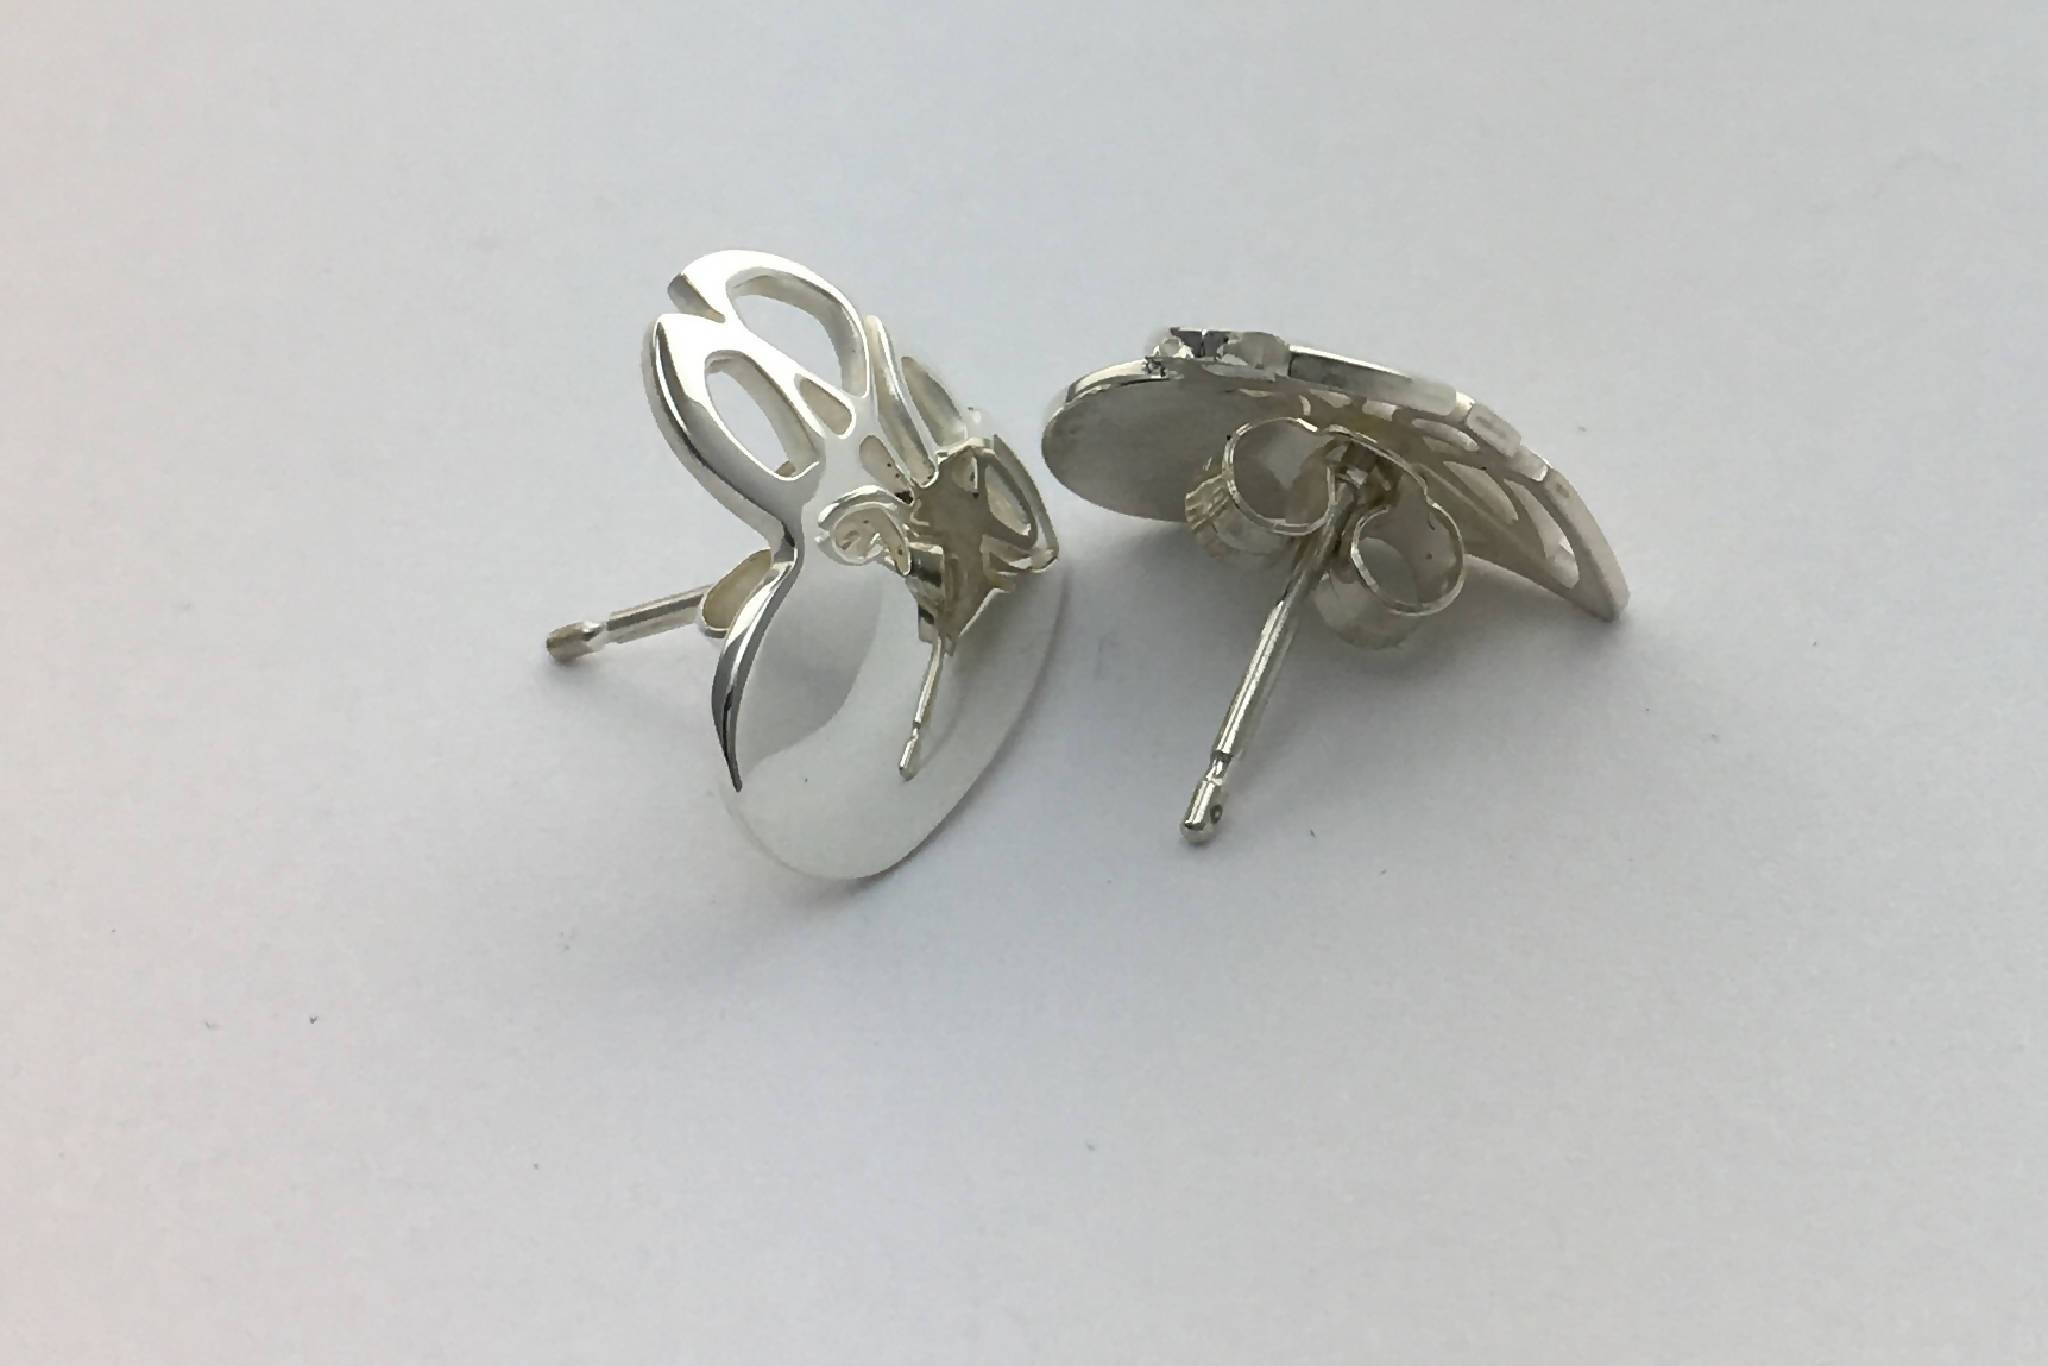 Heart shape stud earrings with Celtic knot design